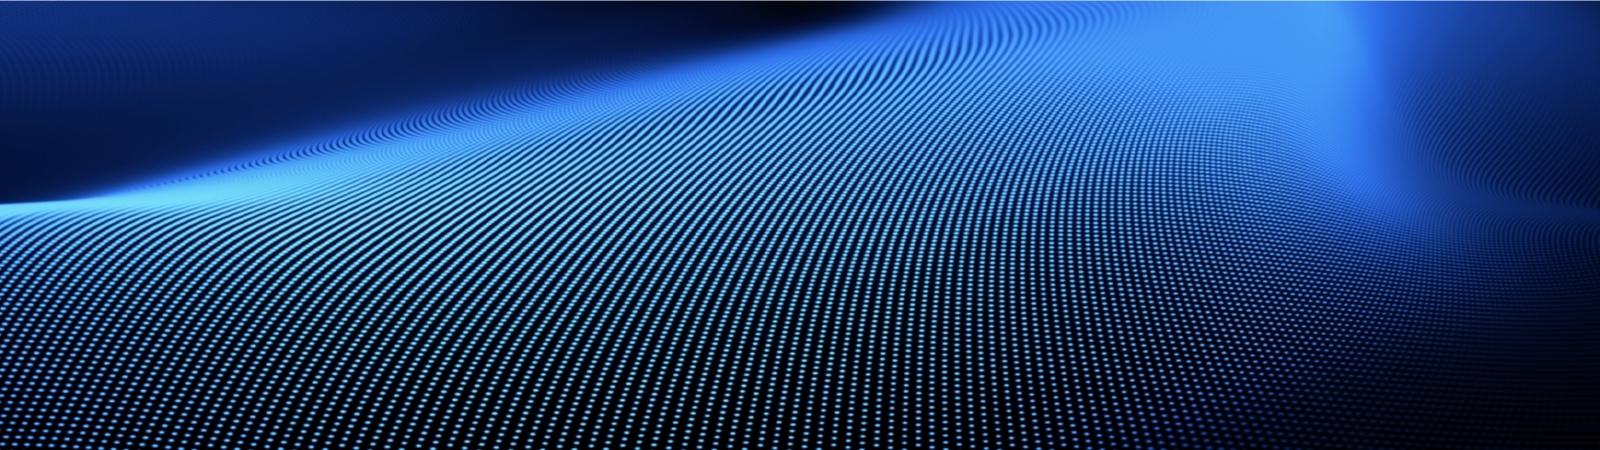 blue digital mesh wave